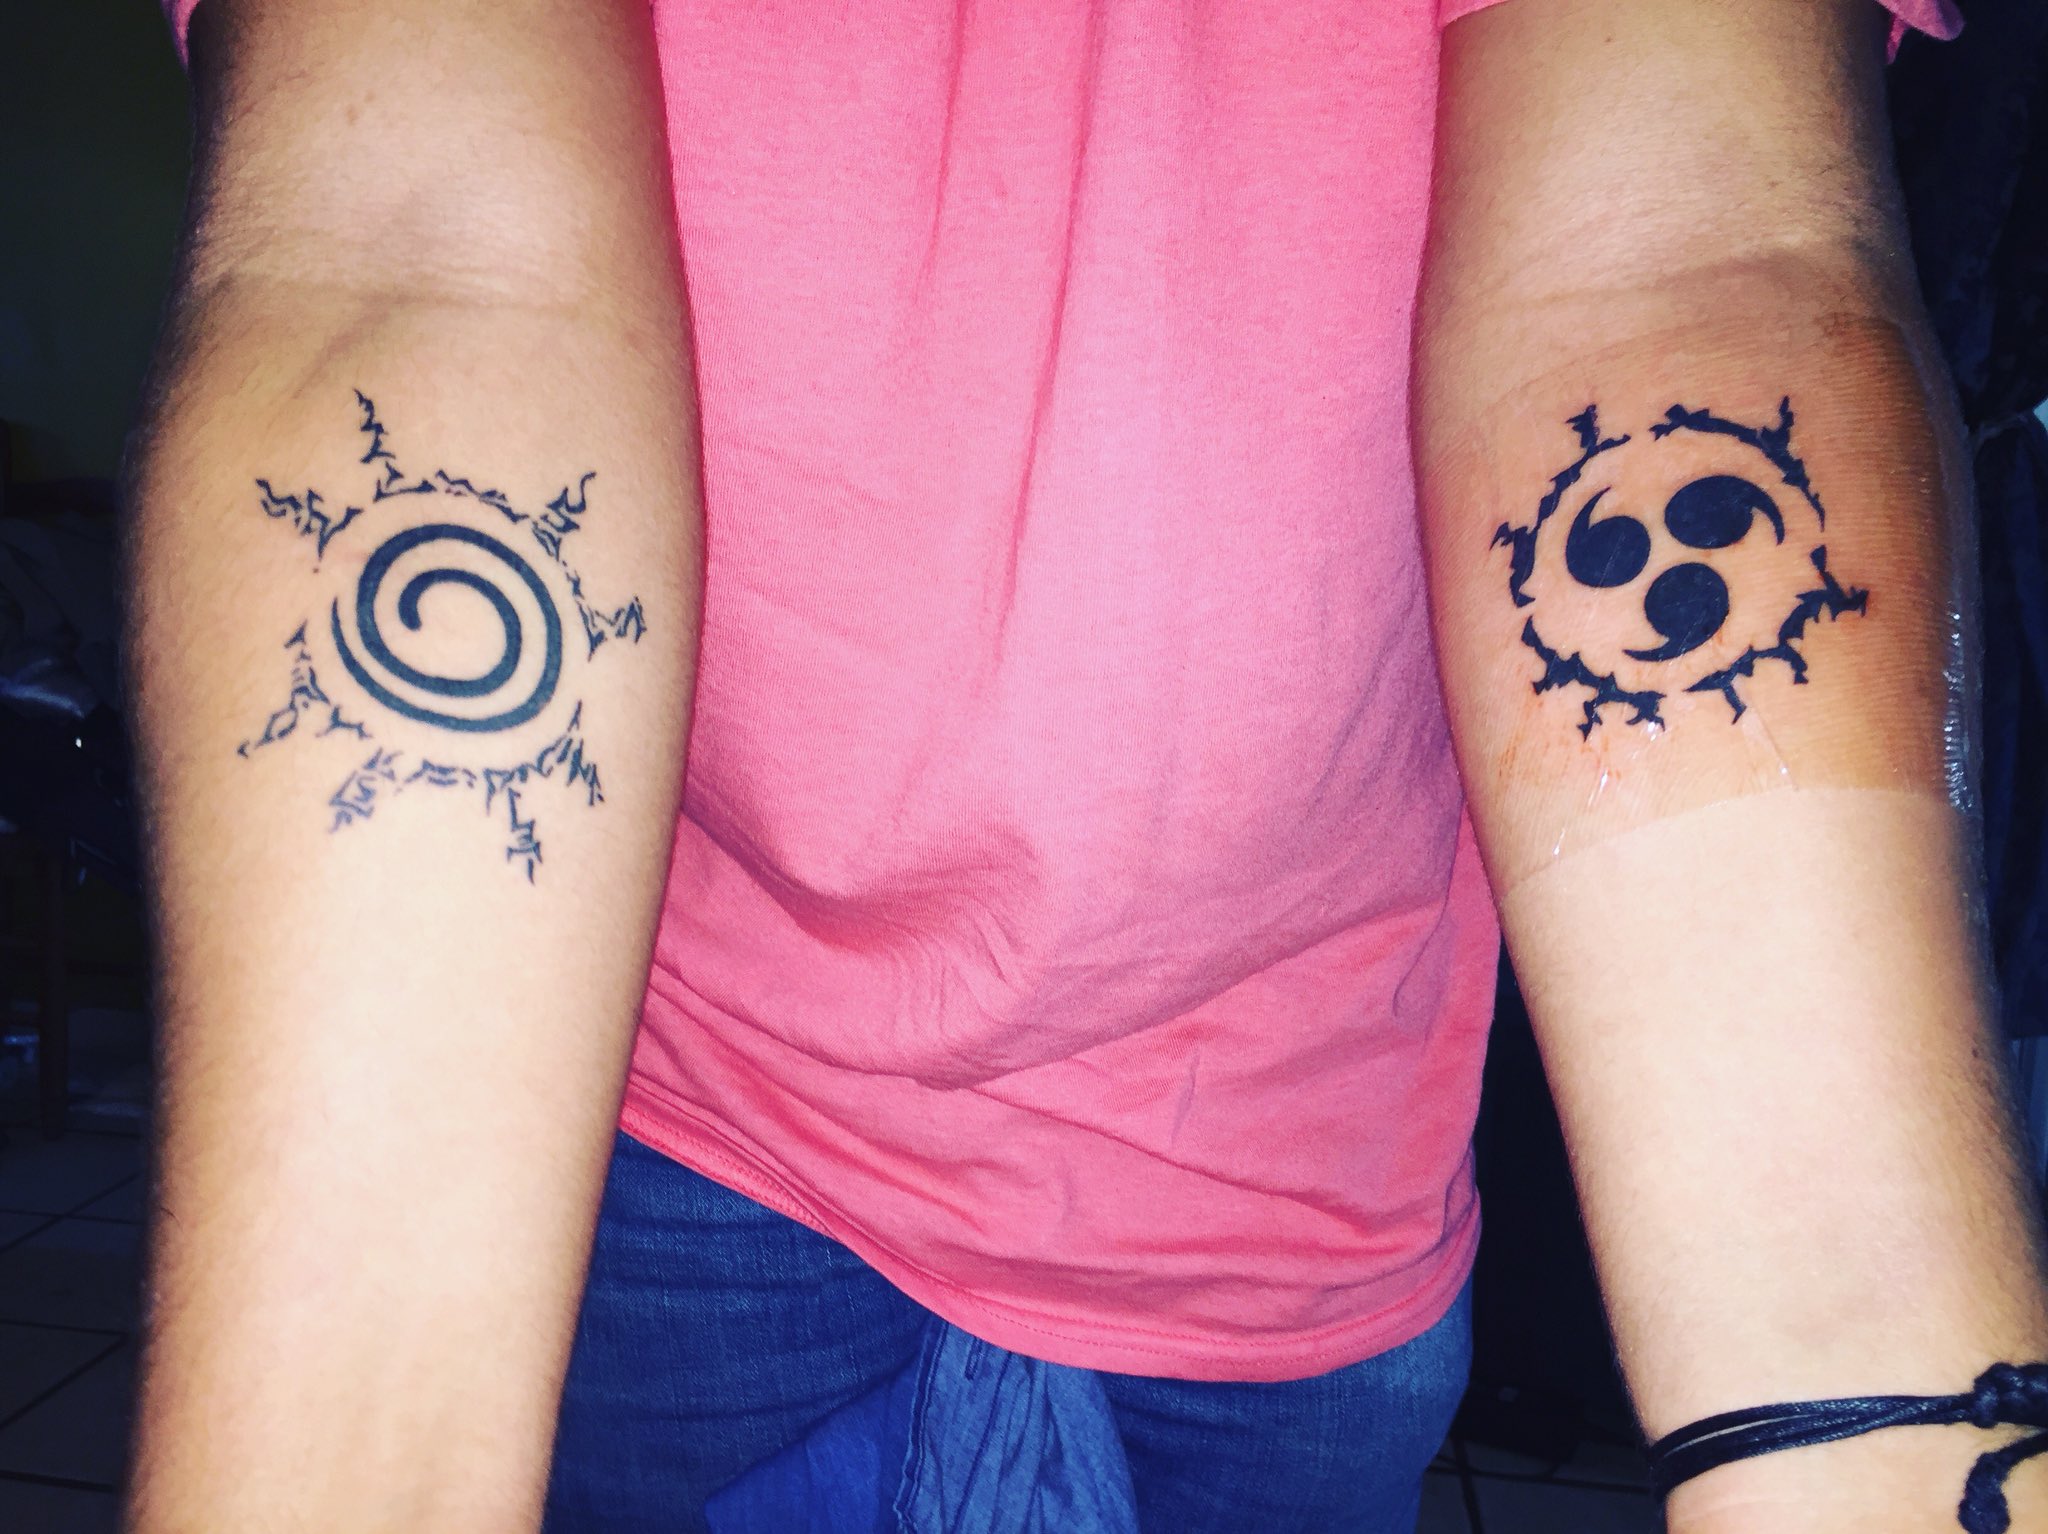 2. "Naruto" and "Sasuke" friendship tattoo - wide 2